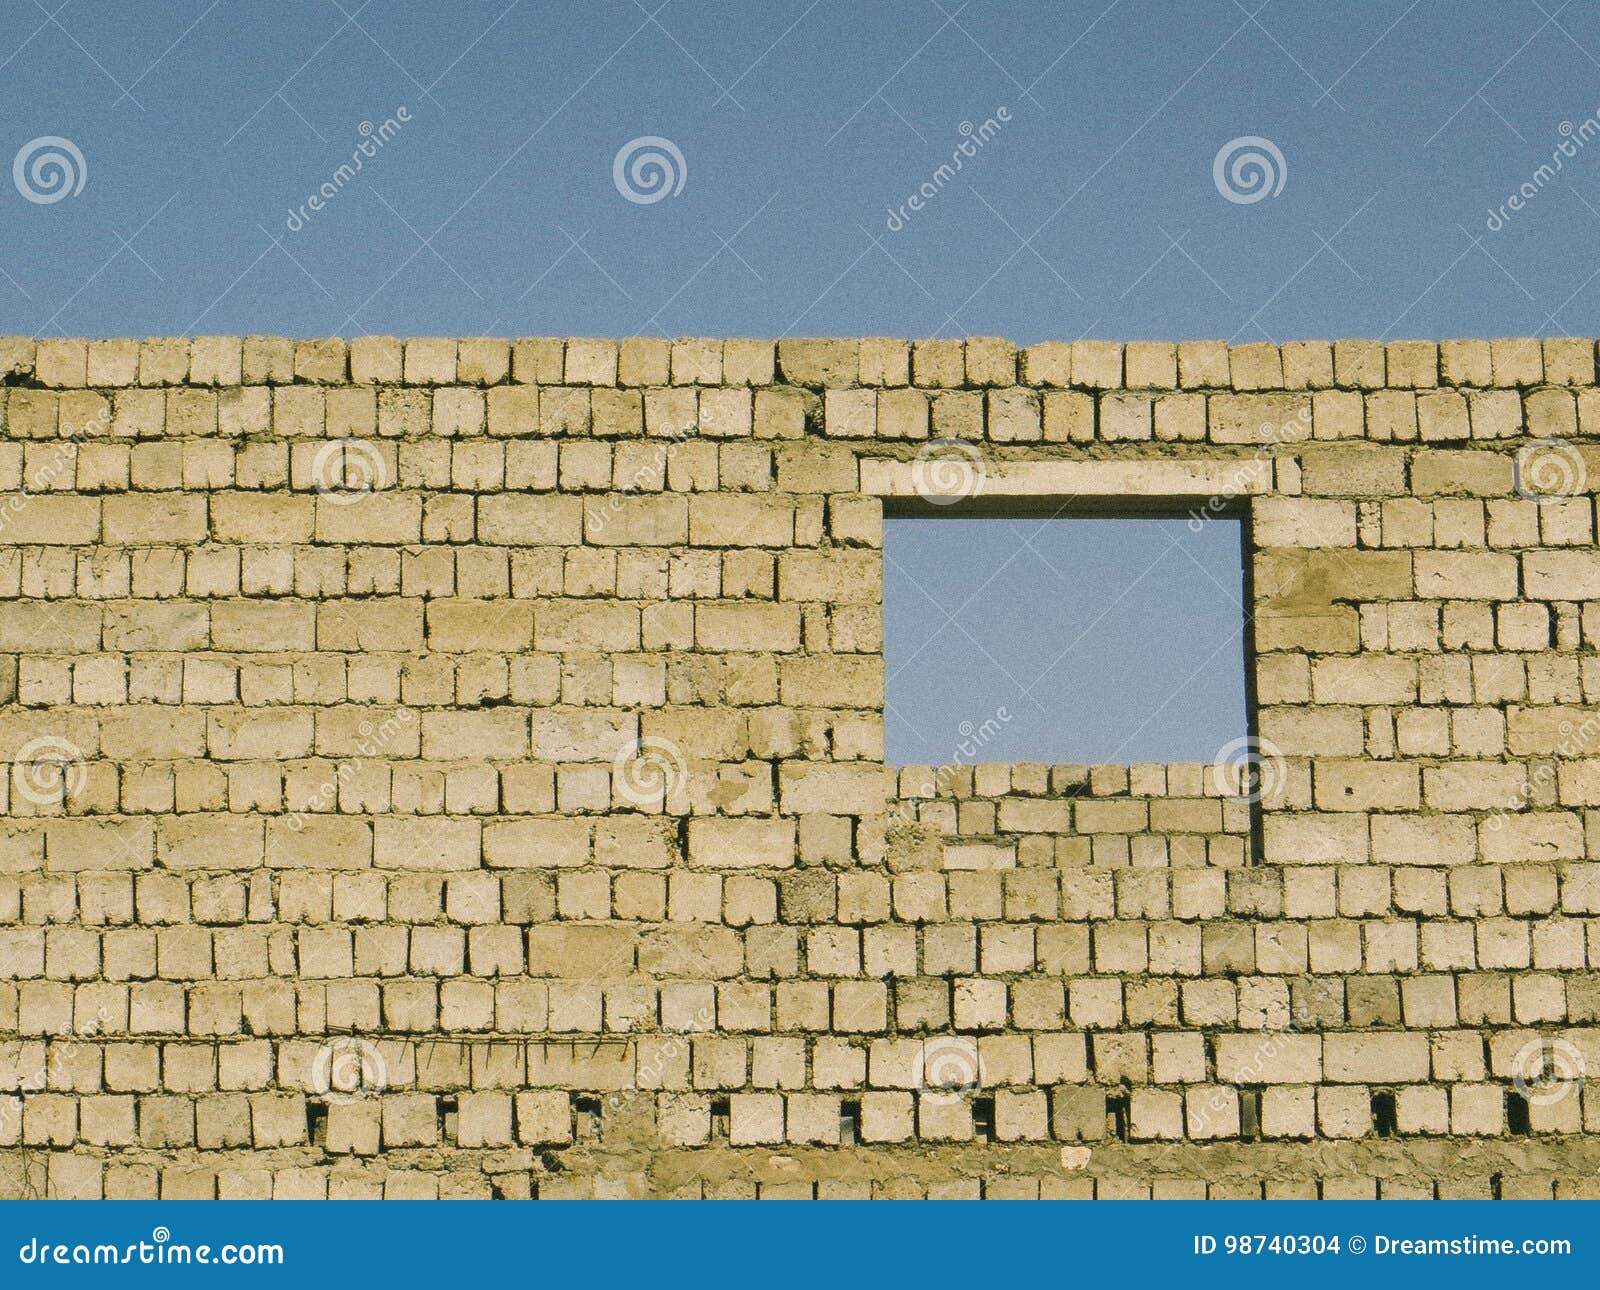 Brick wall with window stock photo. Image of brickwork - 98740304